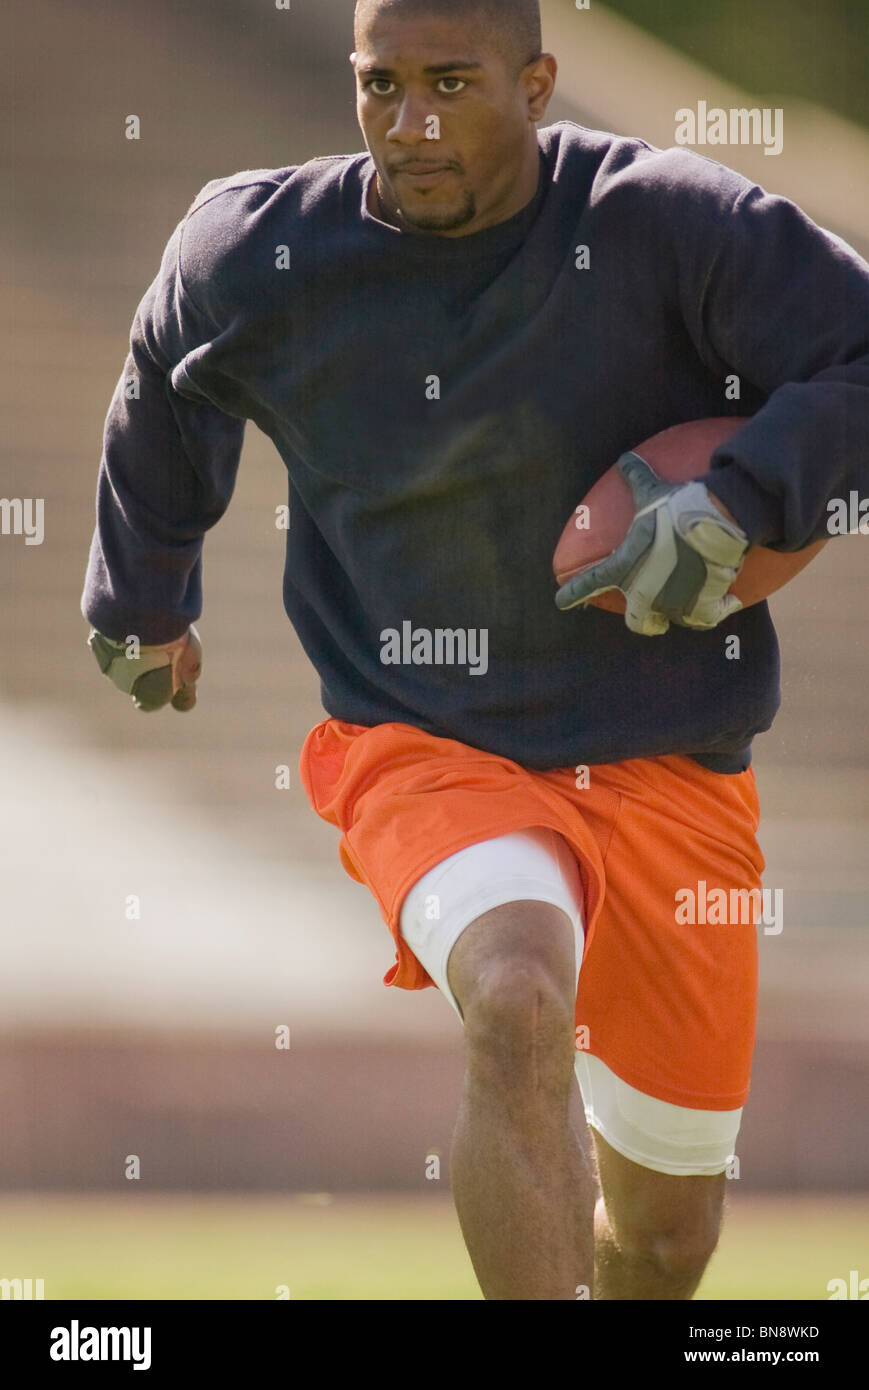 Man running with football Stock Photo